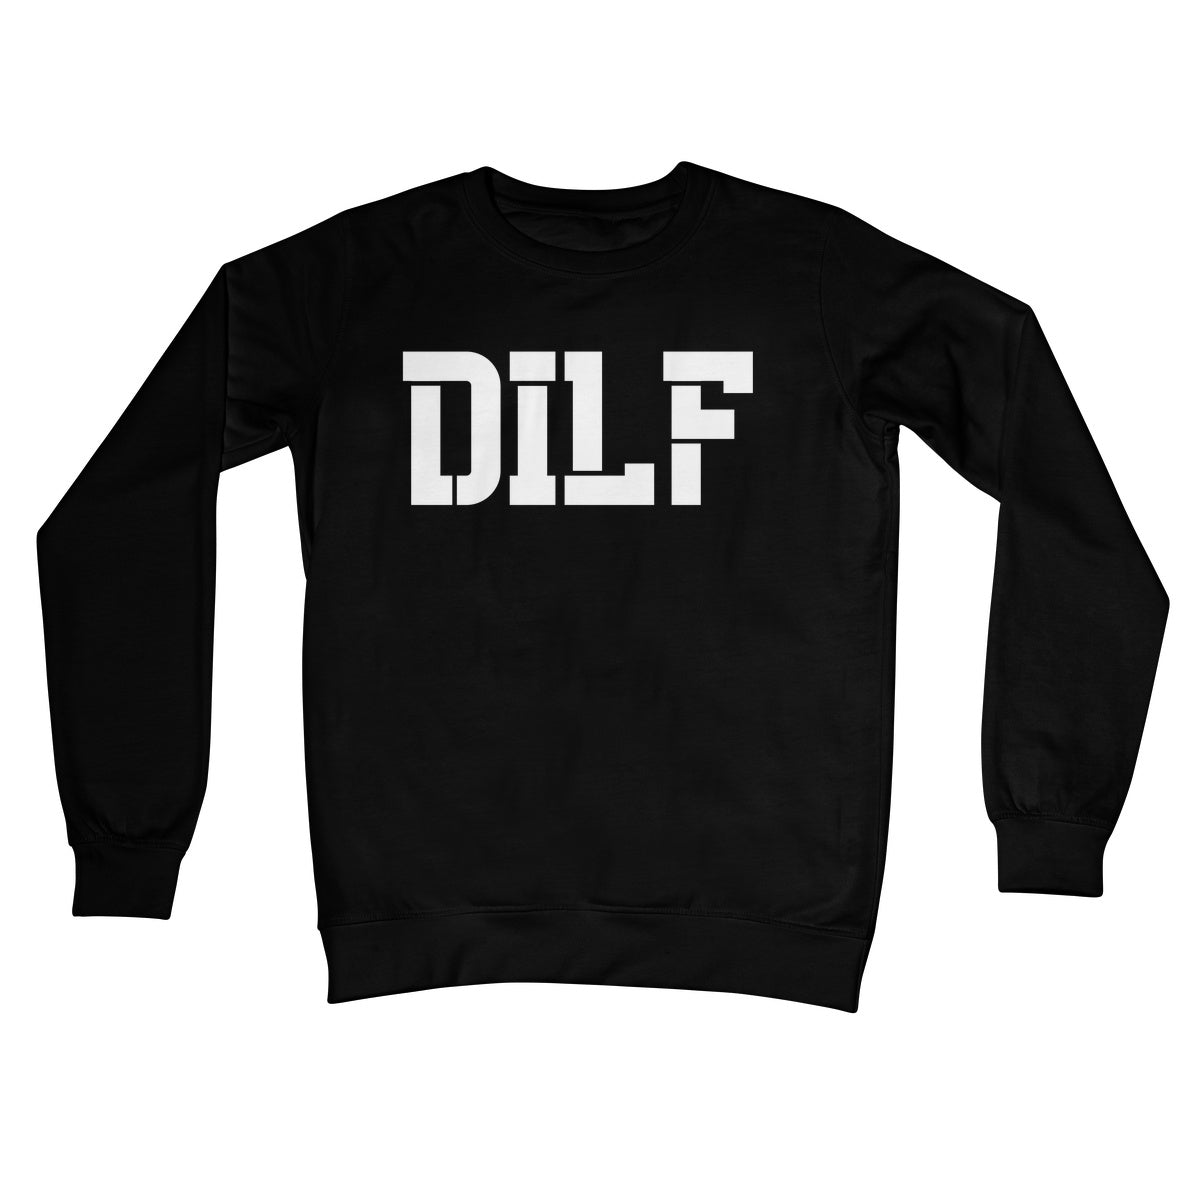 dilf jumper black